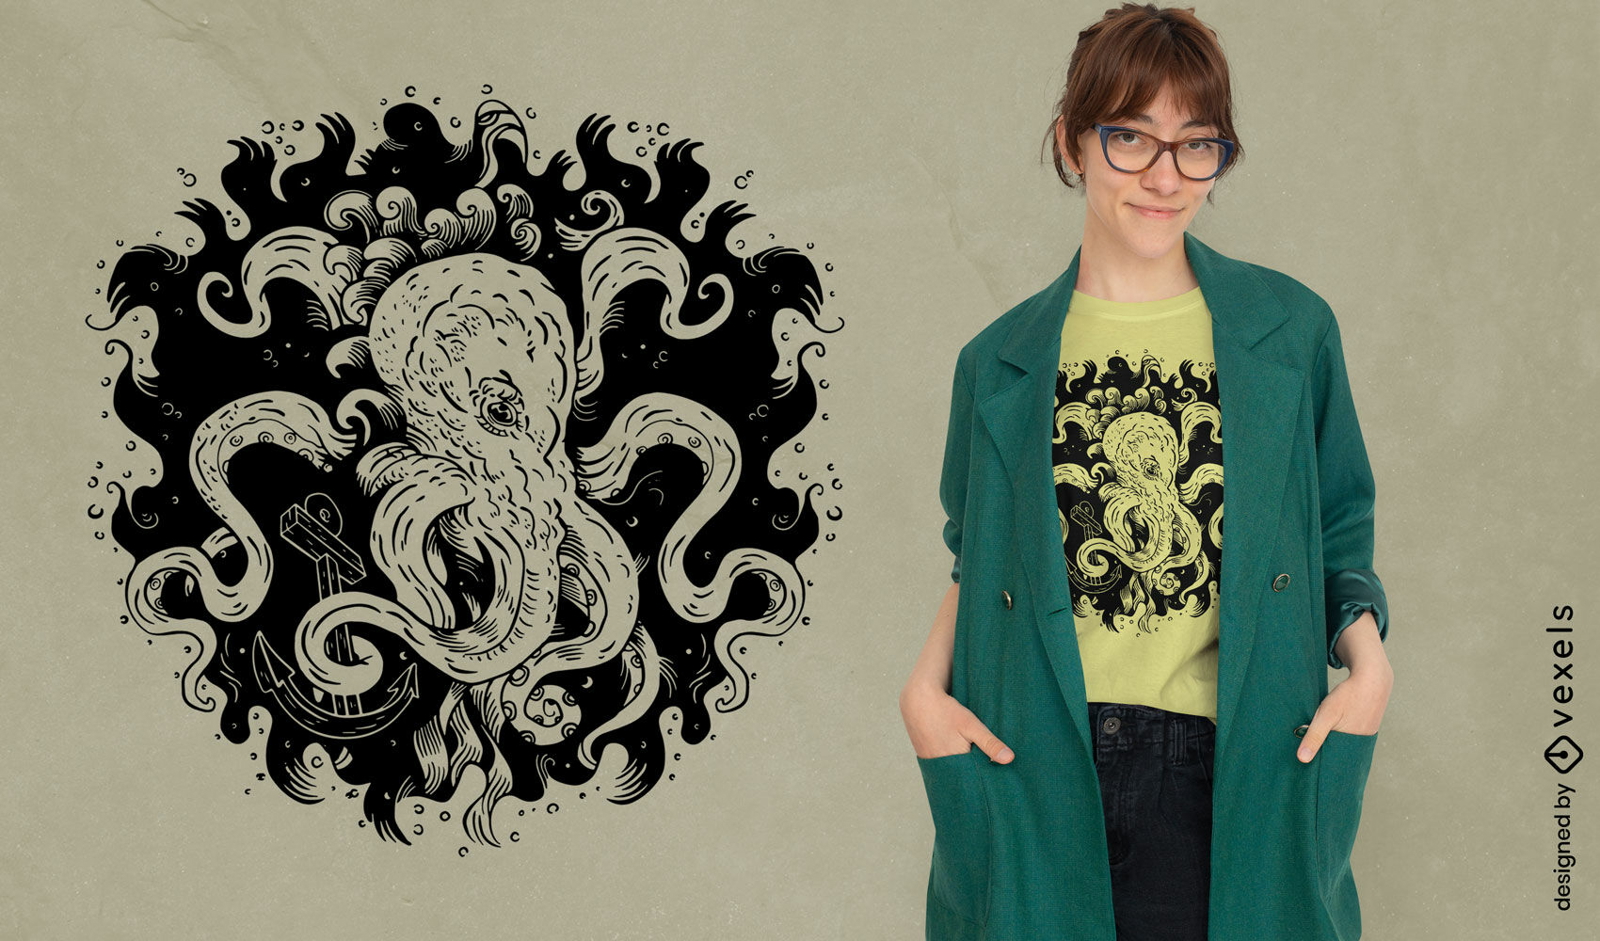 Dark octopus t-shirt design